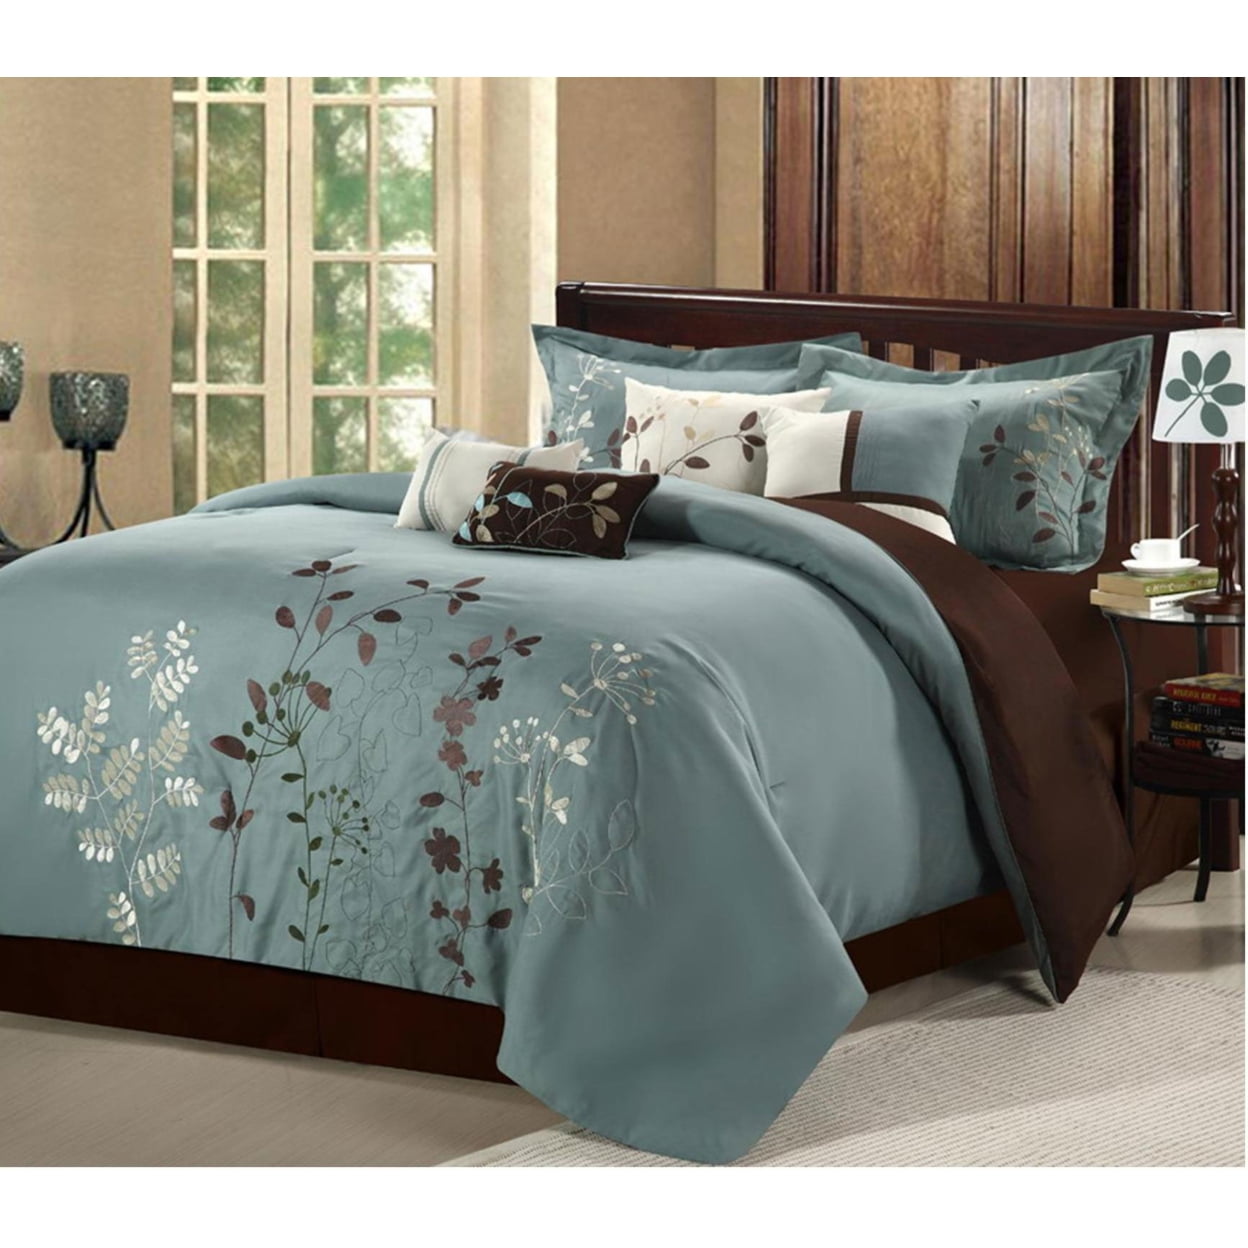 21cq103-us Bliss Garden Embroidered Comforter Set - Sage - Queen - 8 Piece